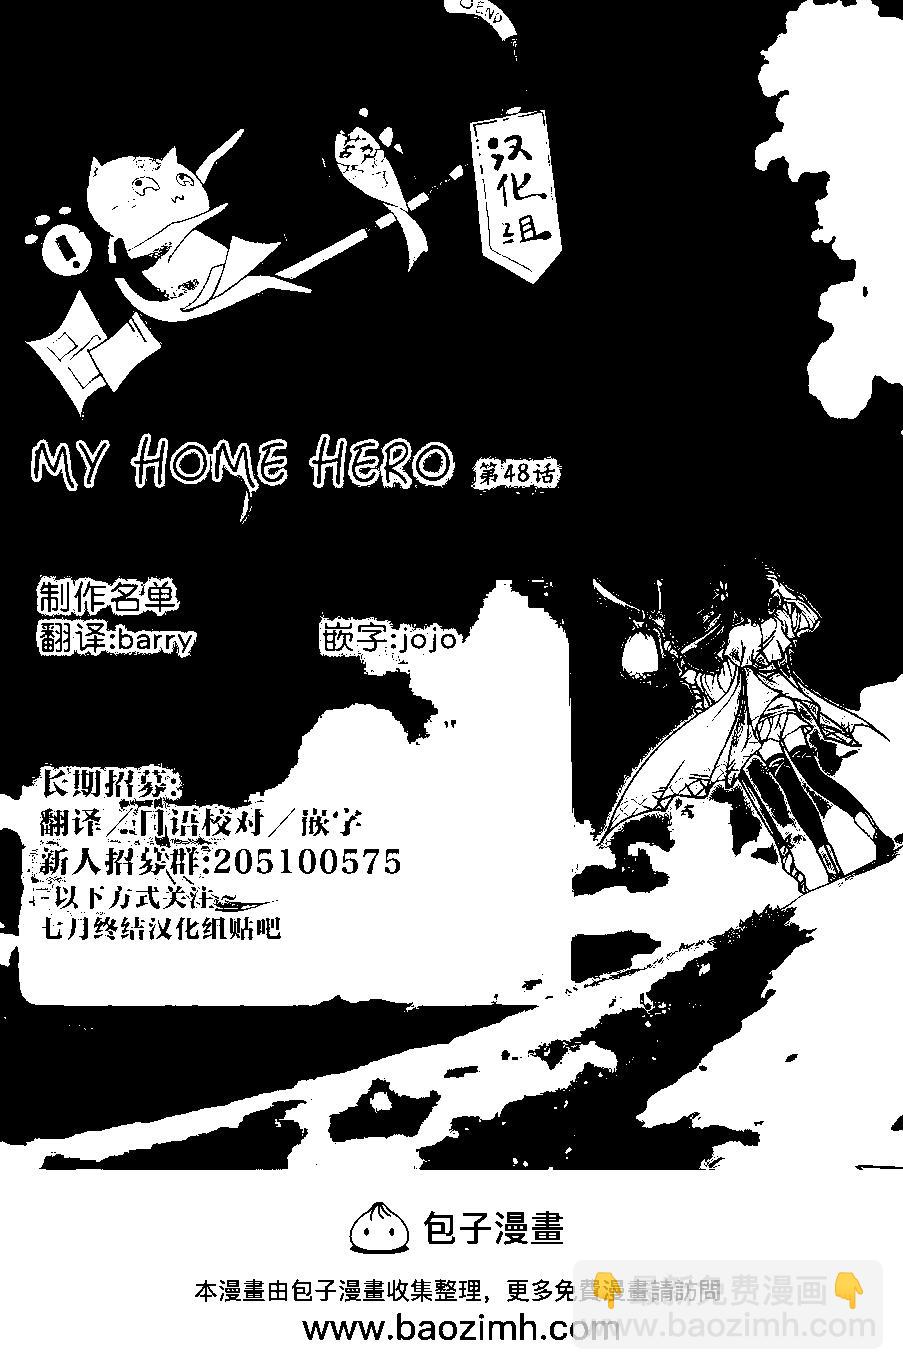 MY HOME HERO - 第48回 - 3